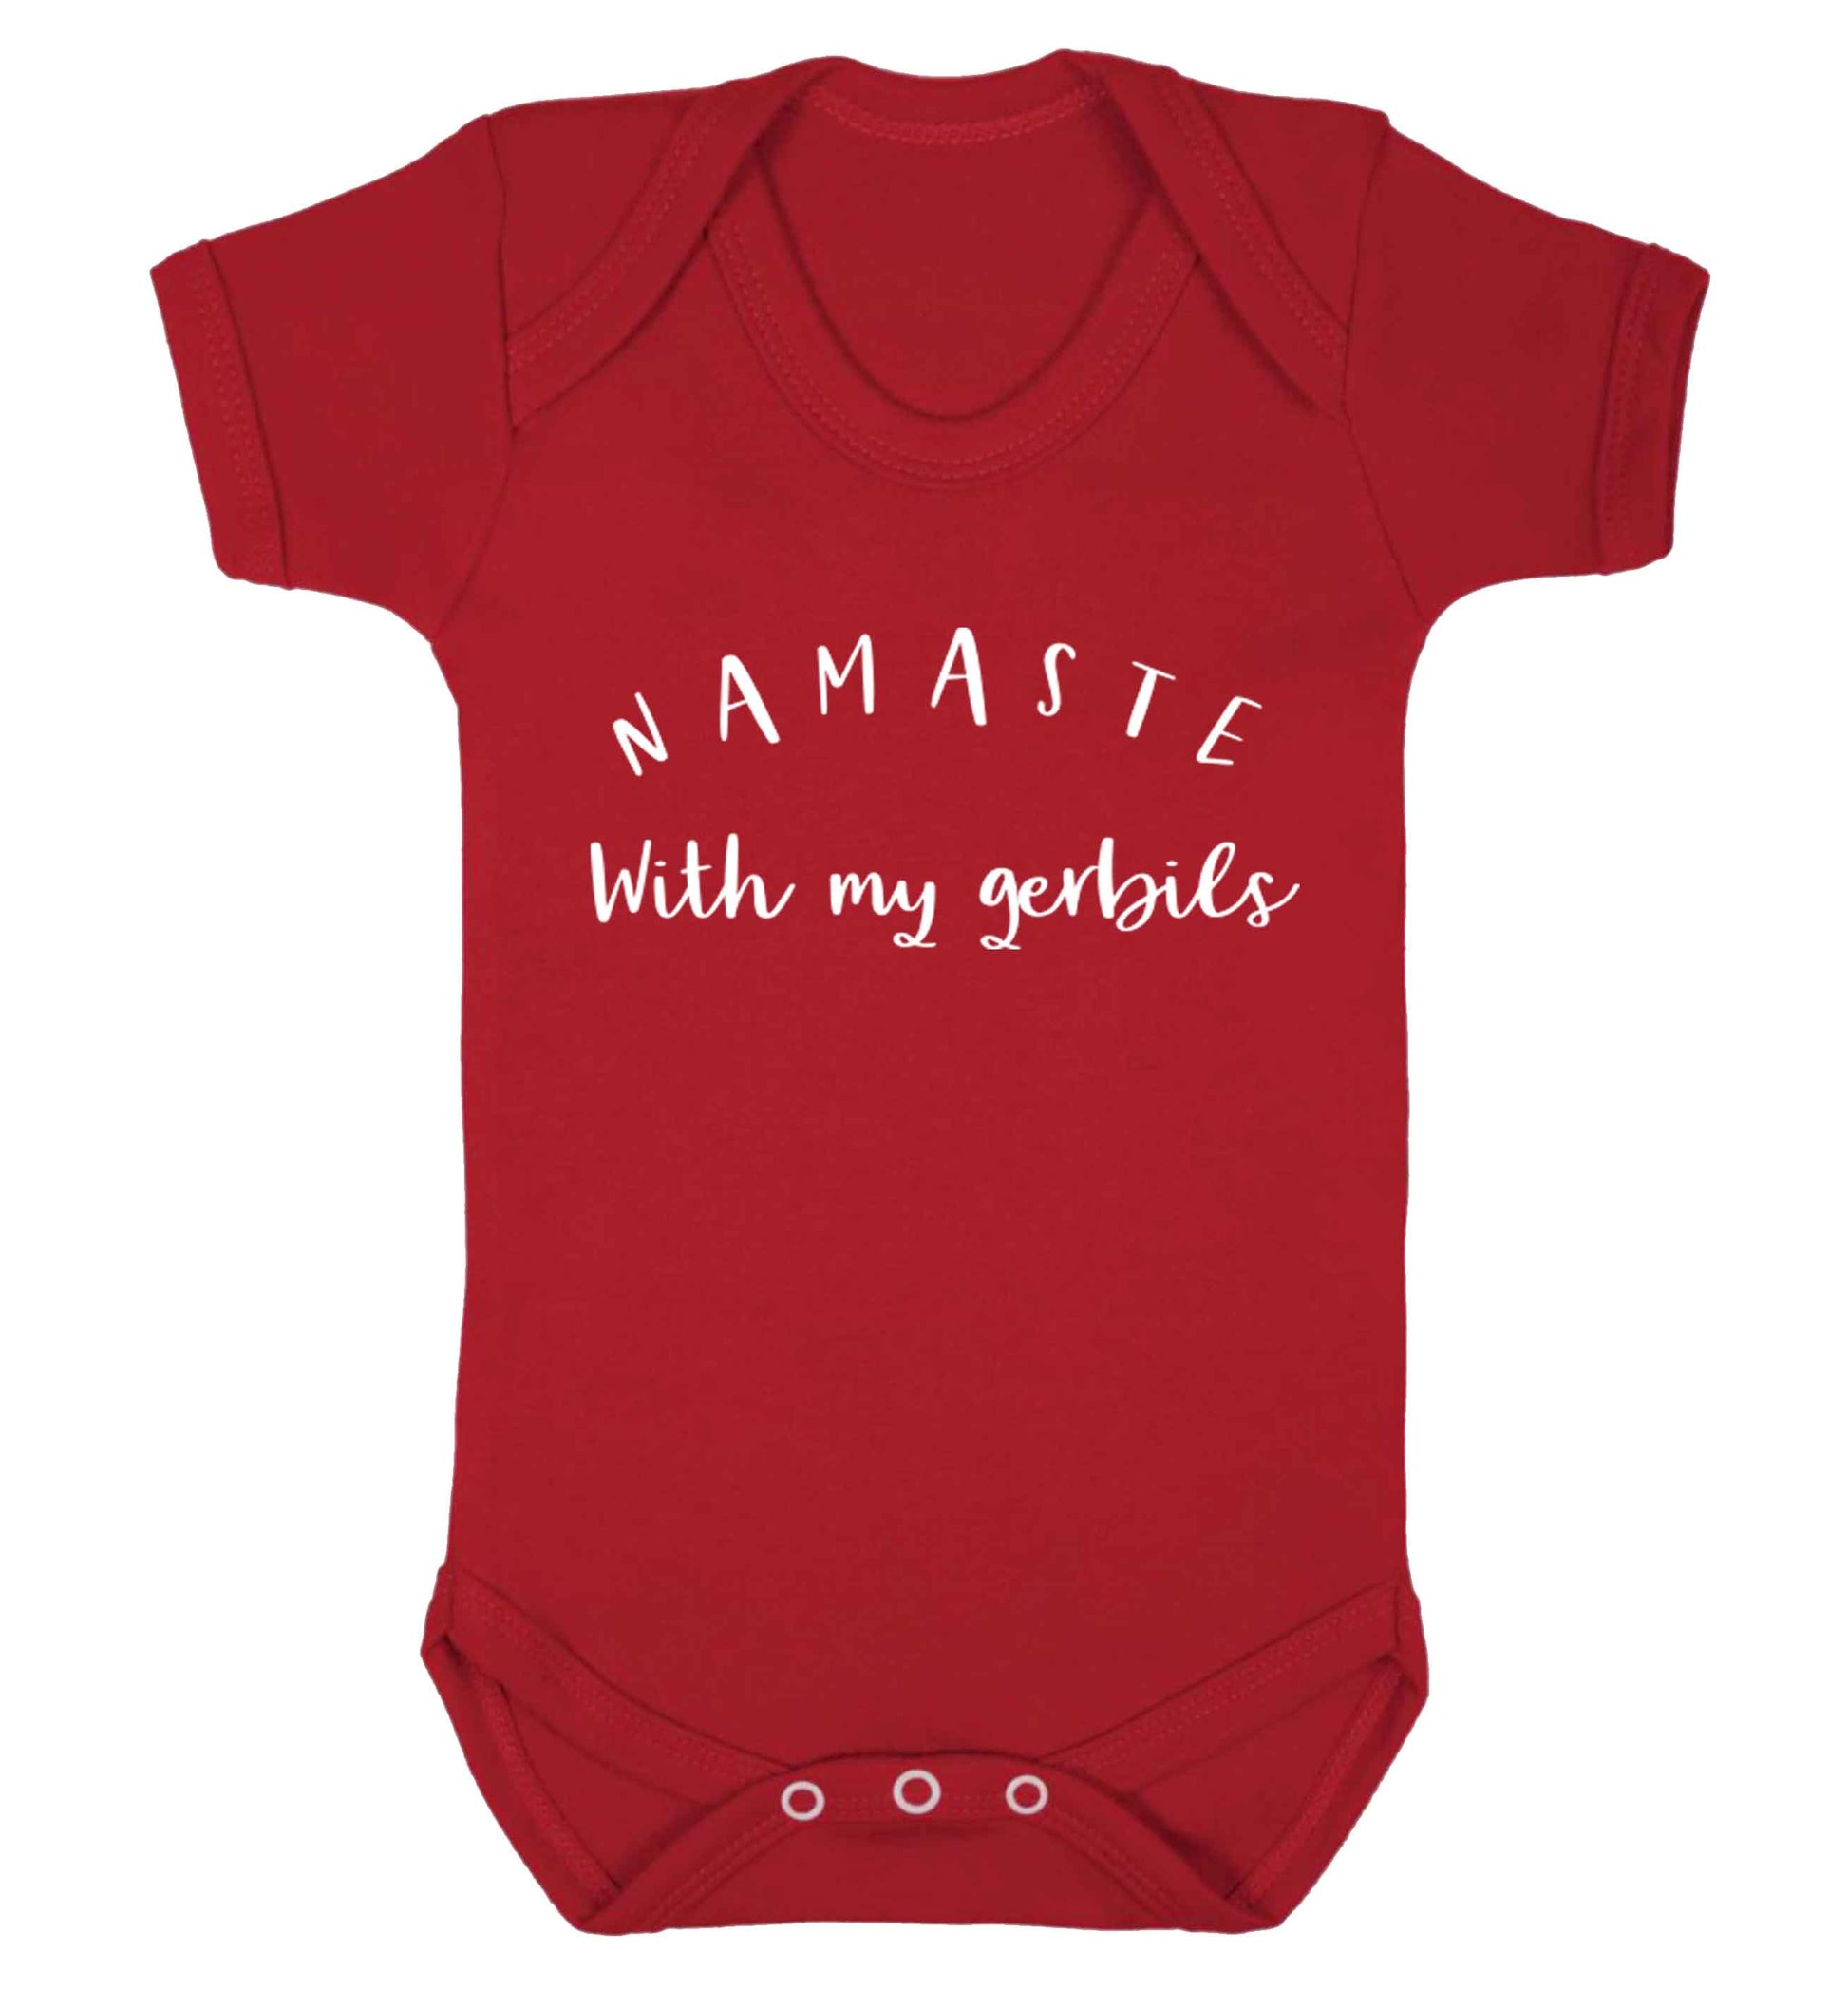 Namaste with my gerbils Baby Vest red 18-24 months